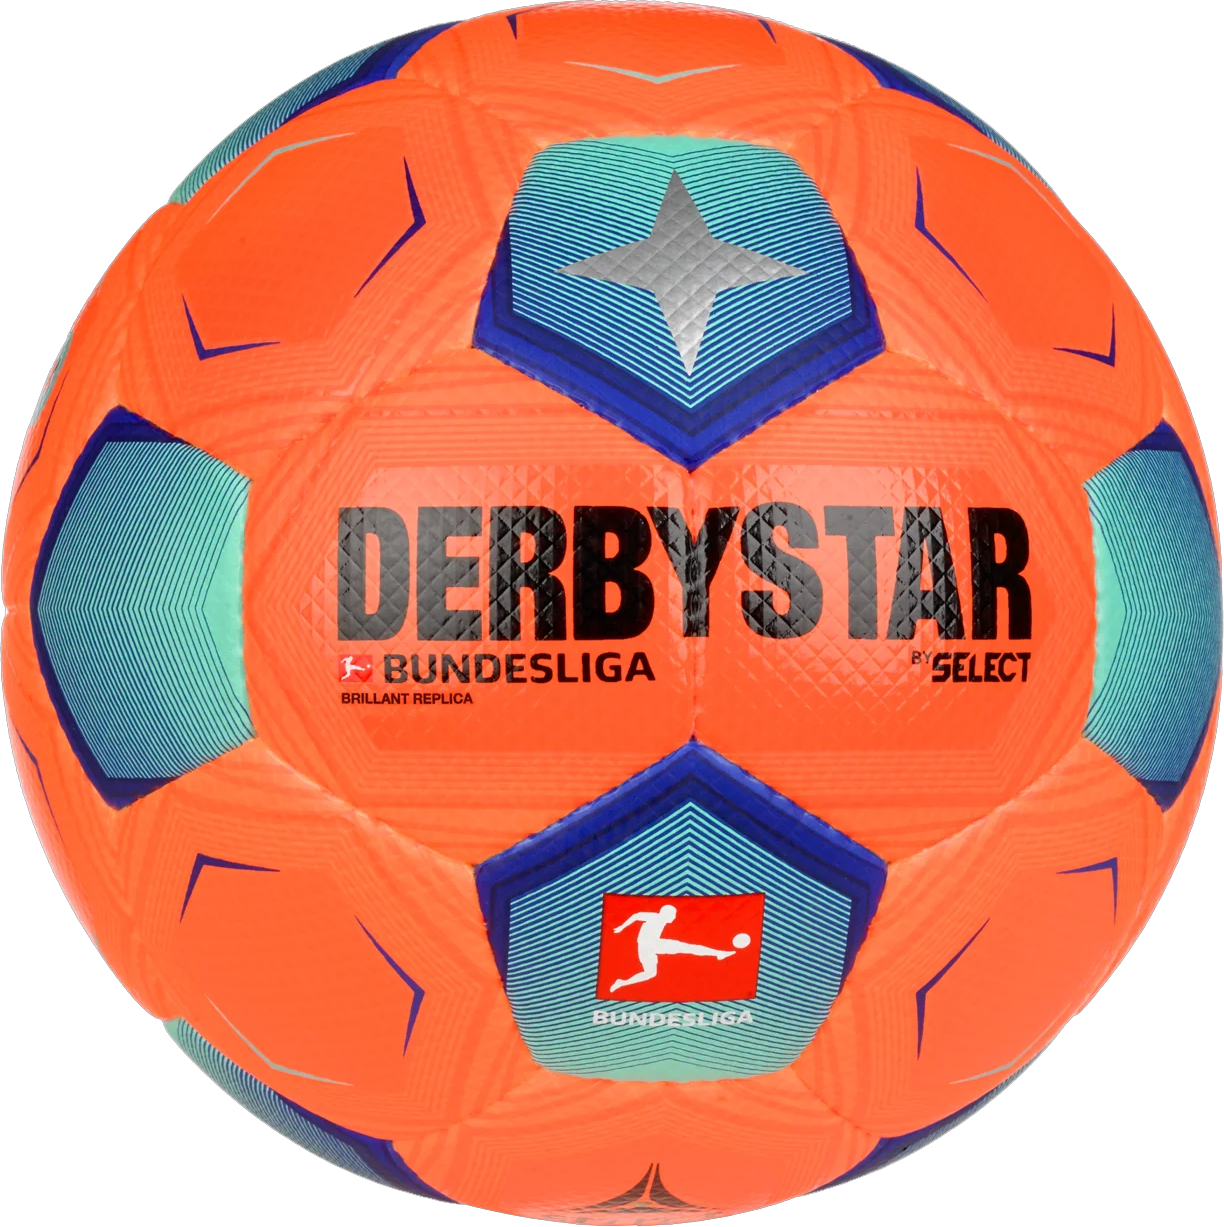 Minge Derbystar Bundesliga Brillant Replica High Visible v23